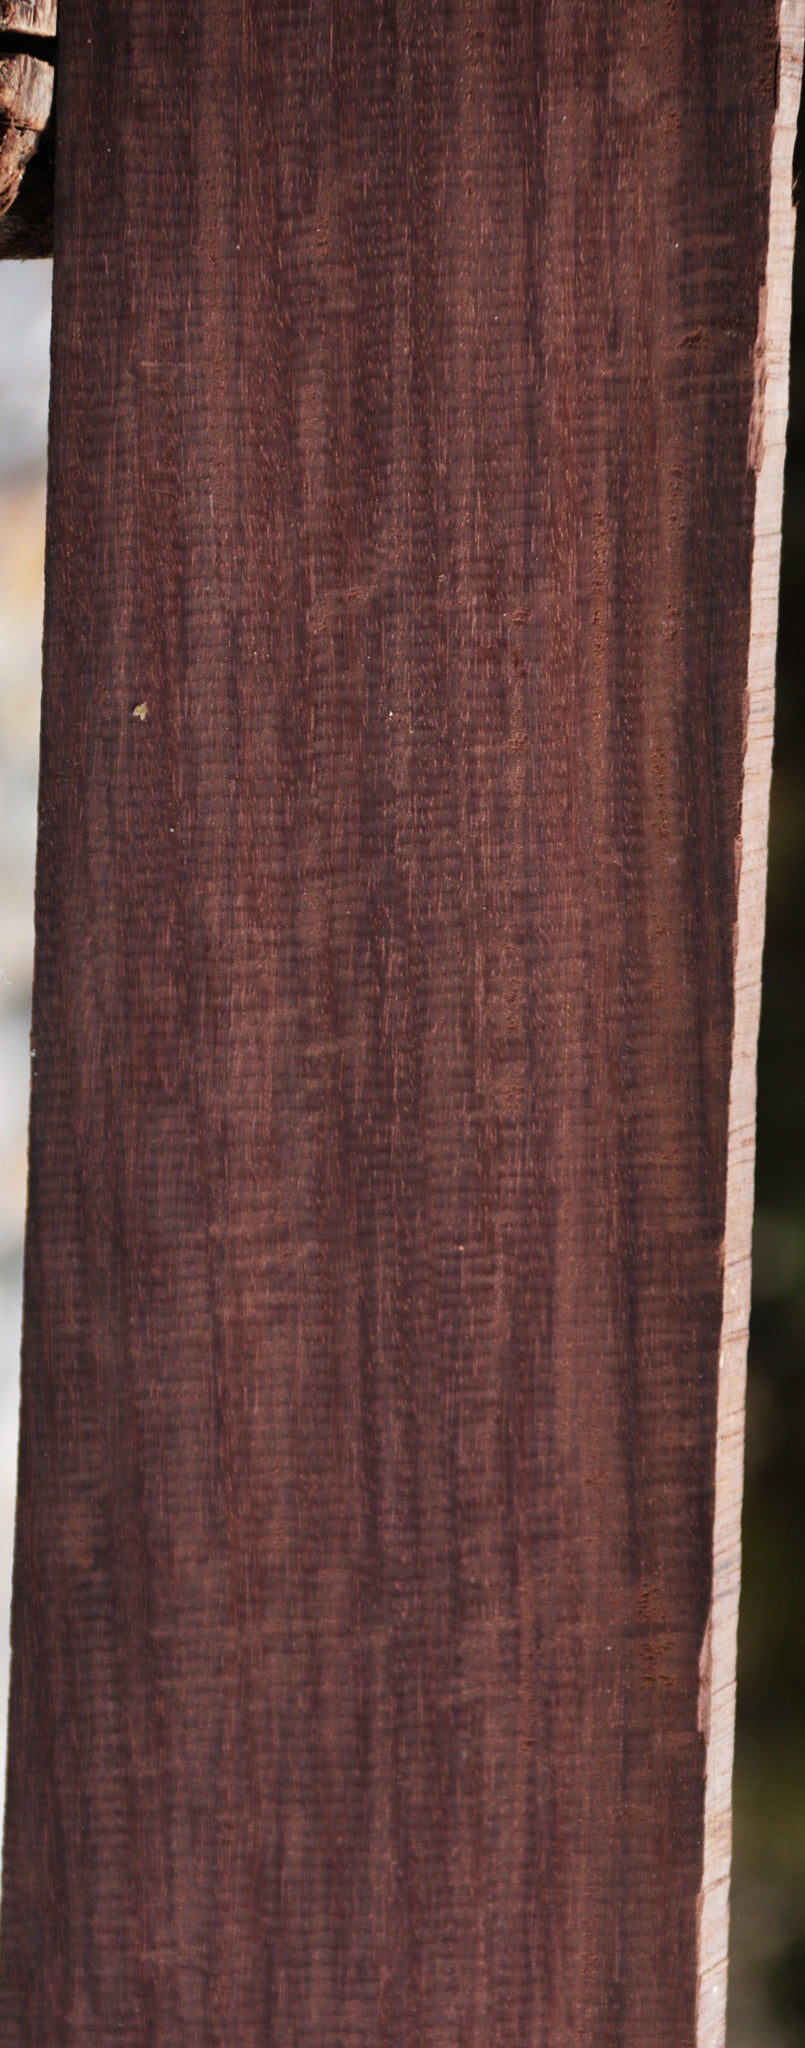 Exhibition Katalox Lumber